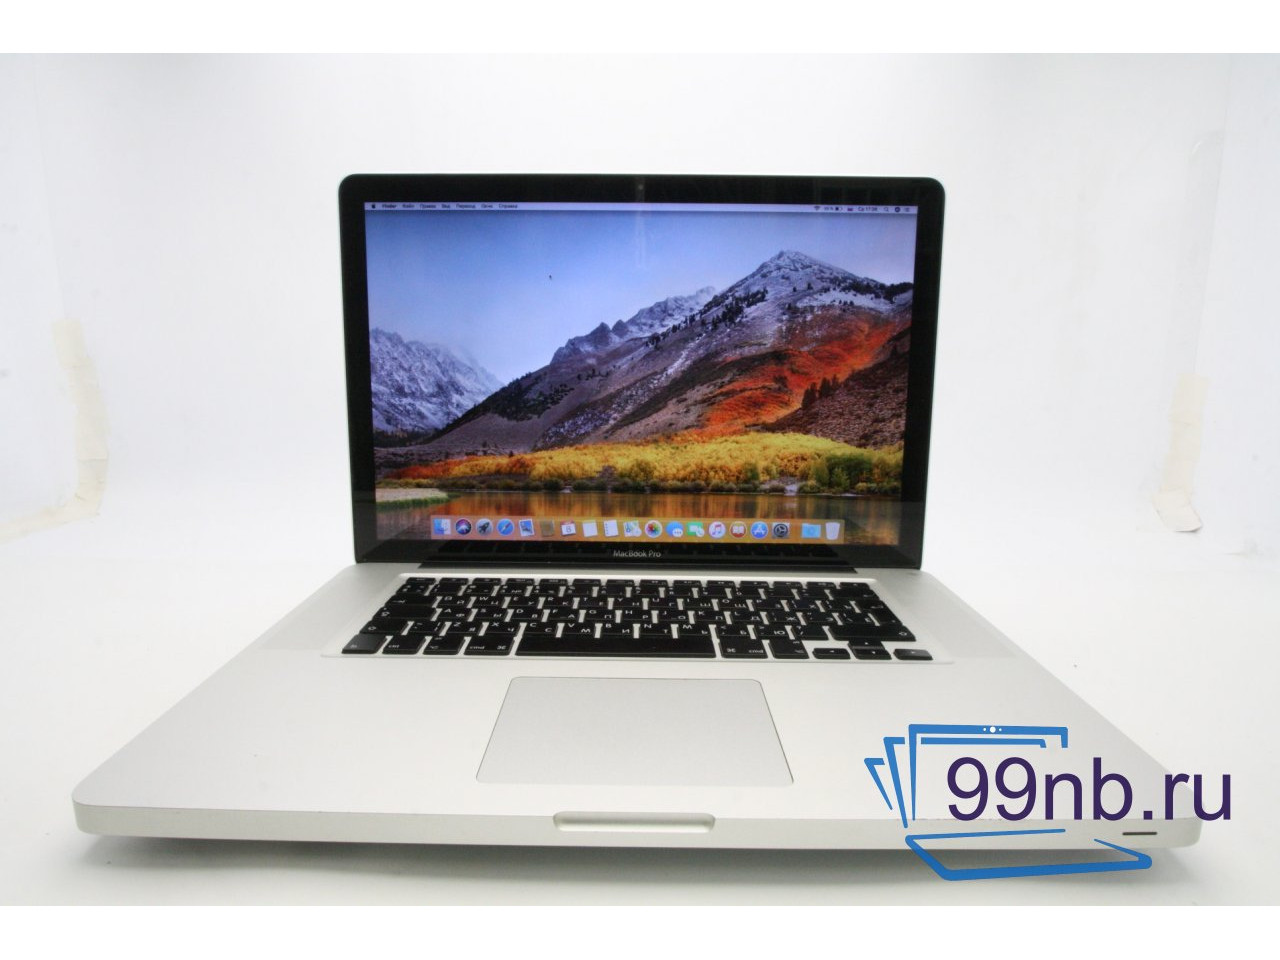 Macbook pro15 late 2011 MD318